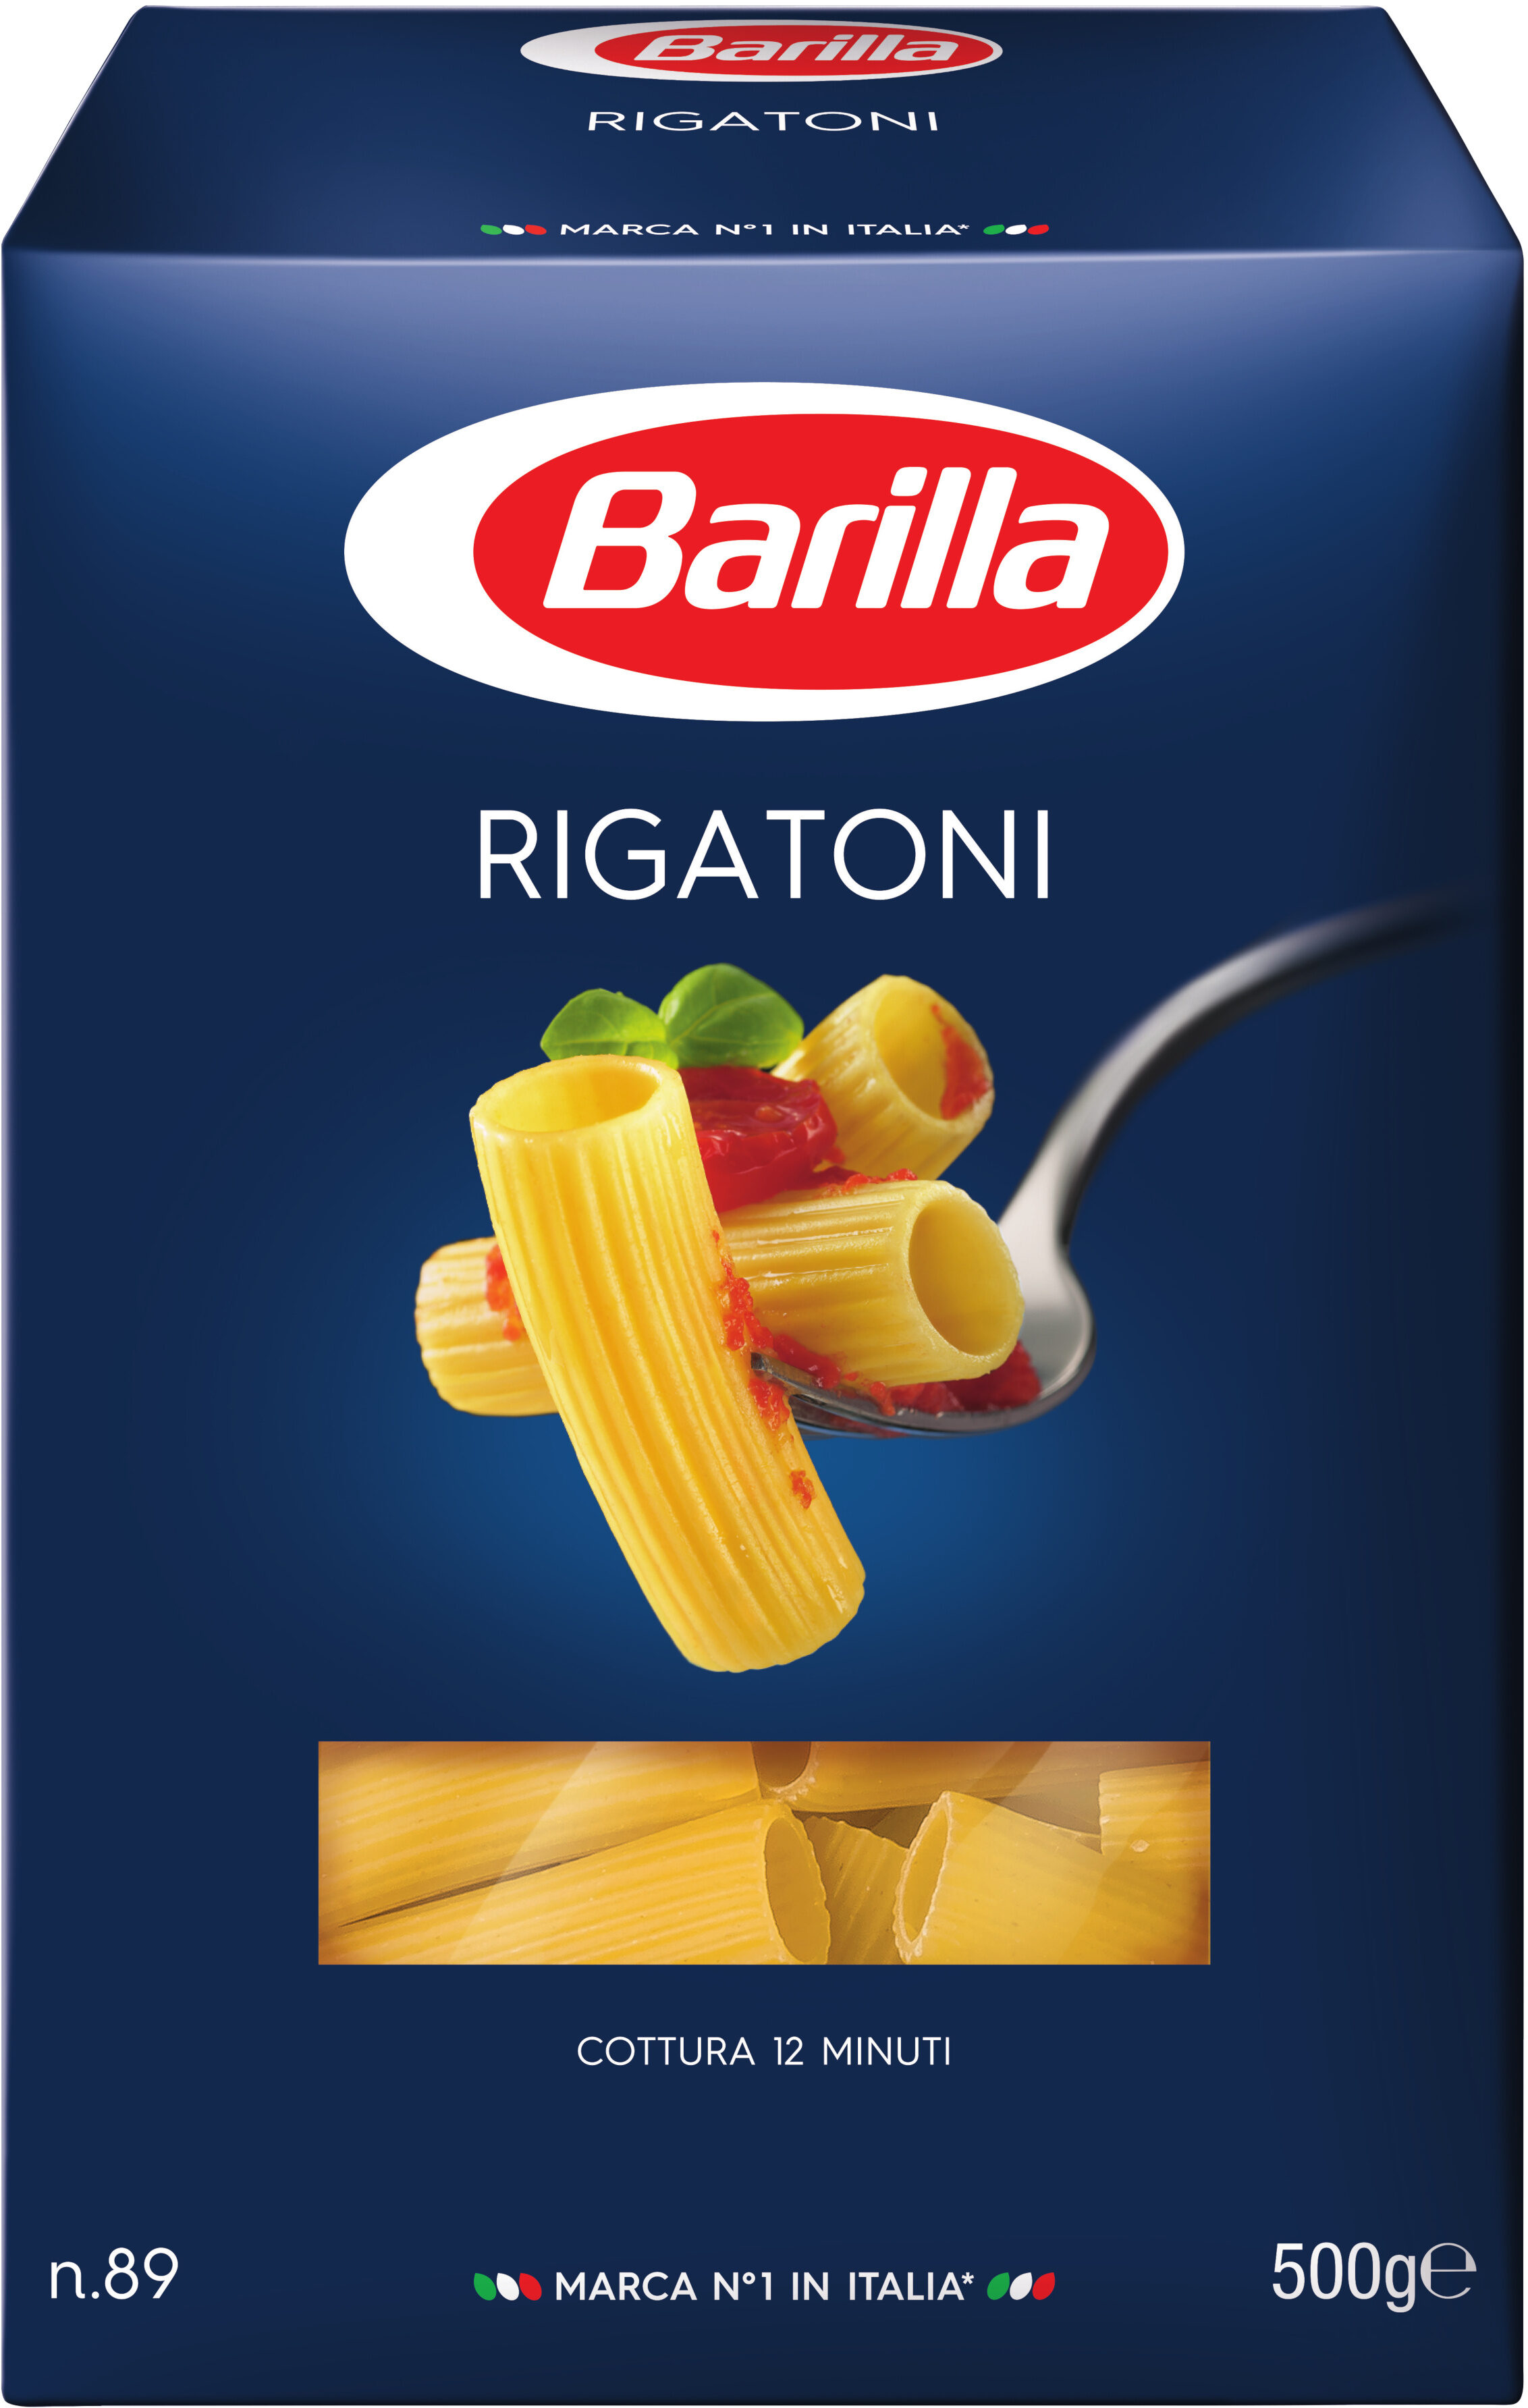 Barilla pates rigatoni - Product - fr